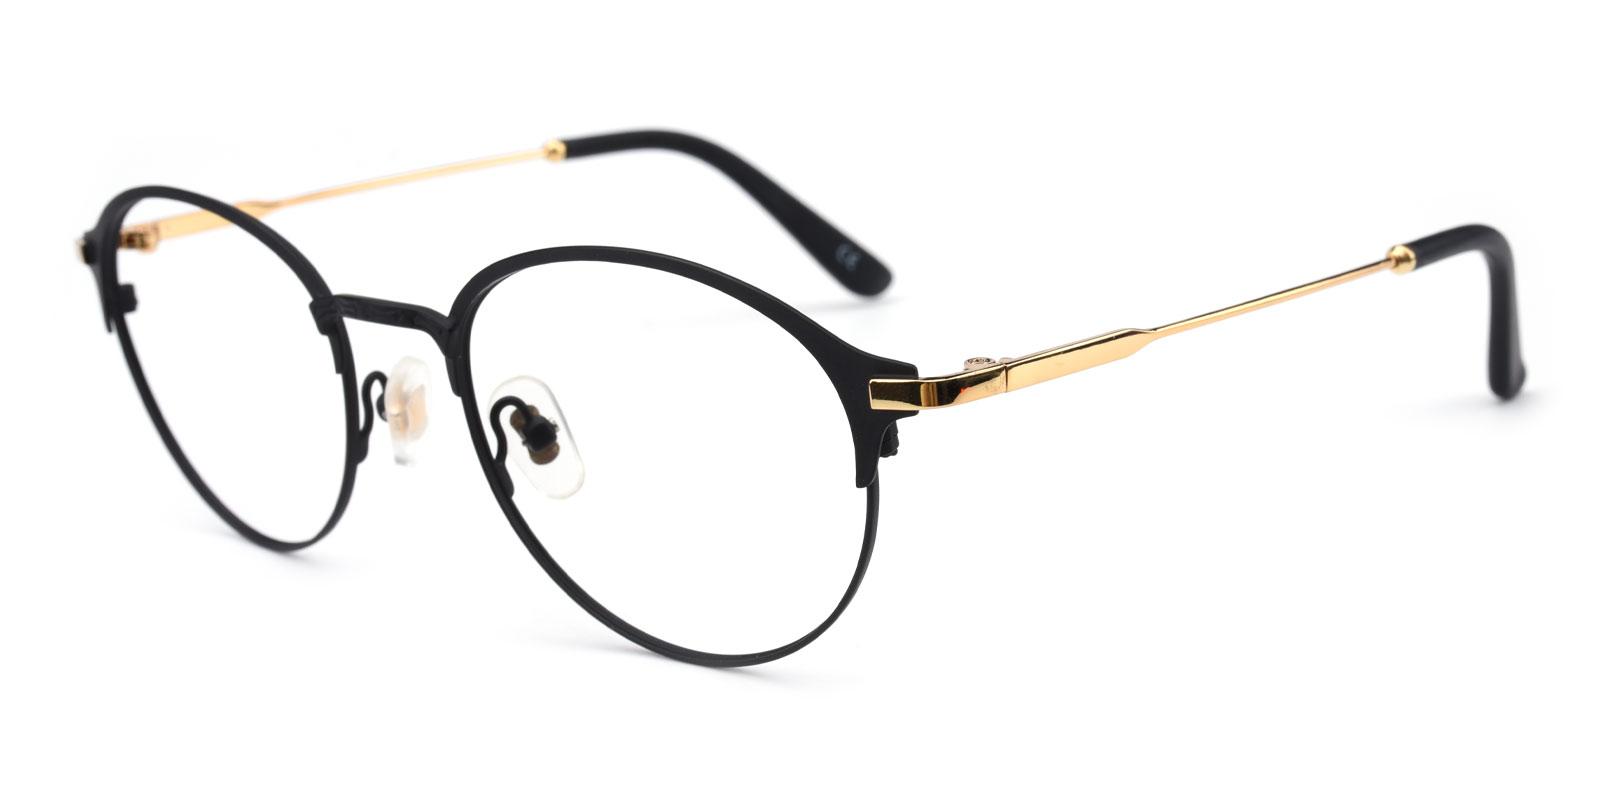 Jean-Black-Round-Metal-Eyeglasses-detail